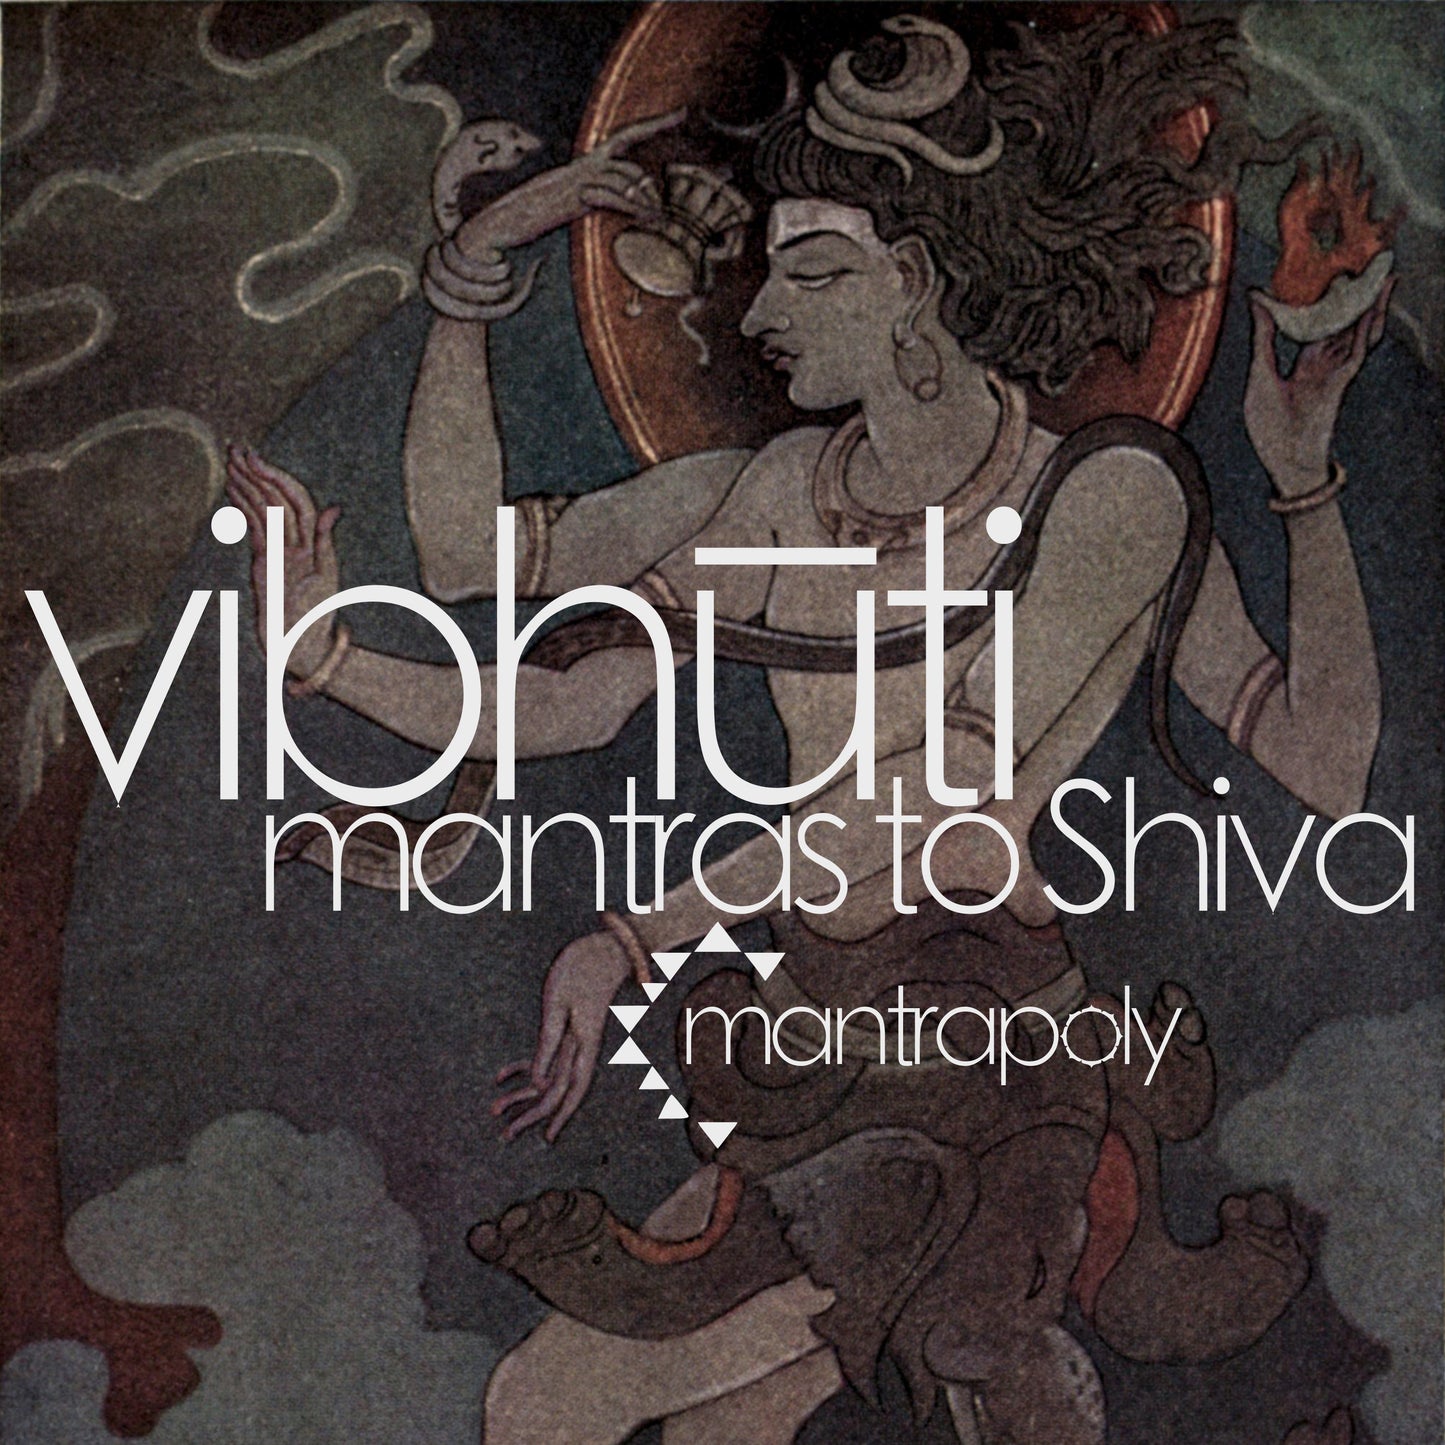 Vibhuti: Mantras to Shiva - Mantrapoly Album